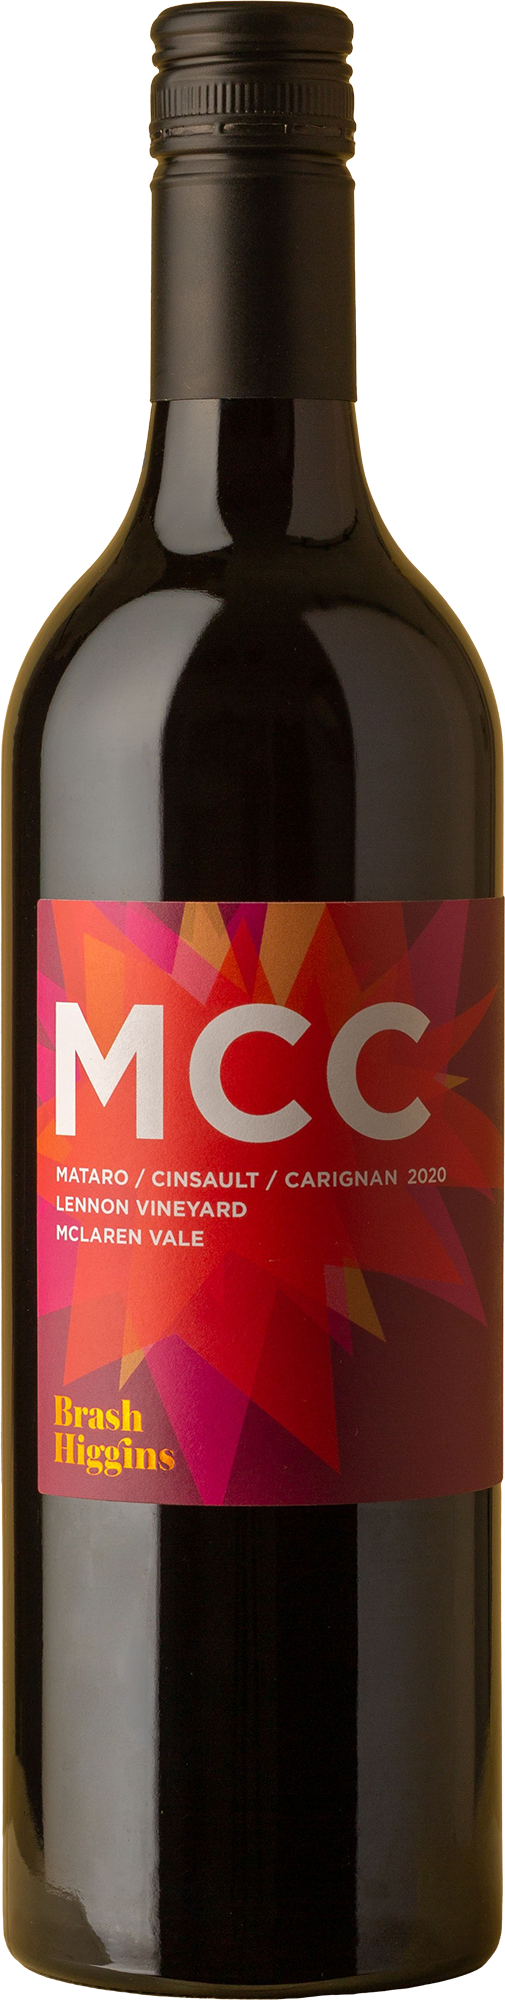 Brash Higgins - MCC Mataro/Carignan/Cinsault 2020 Red Wine